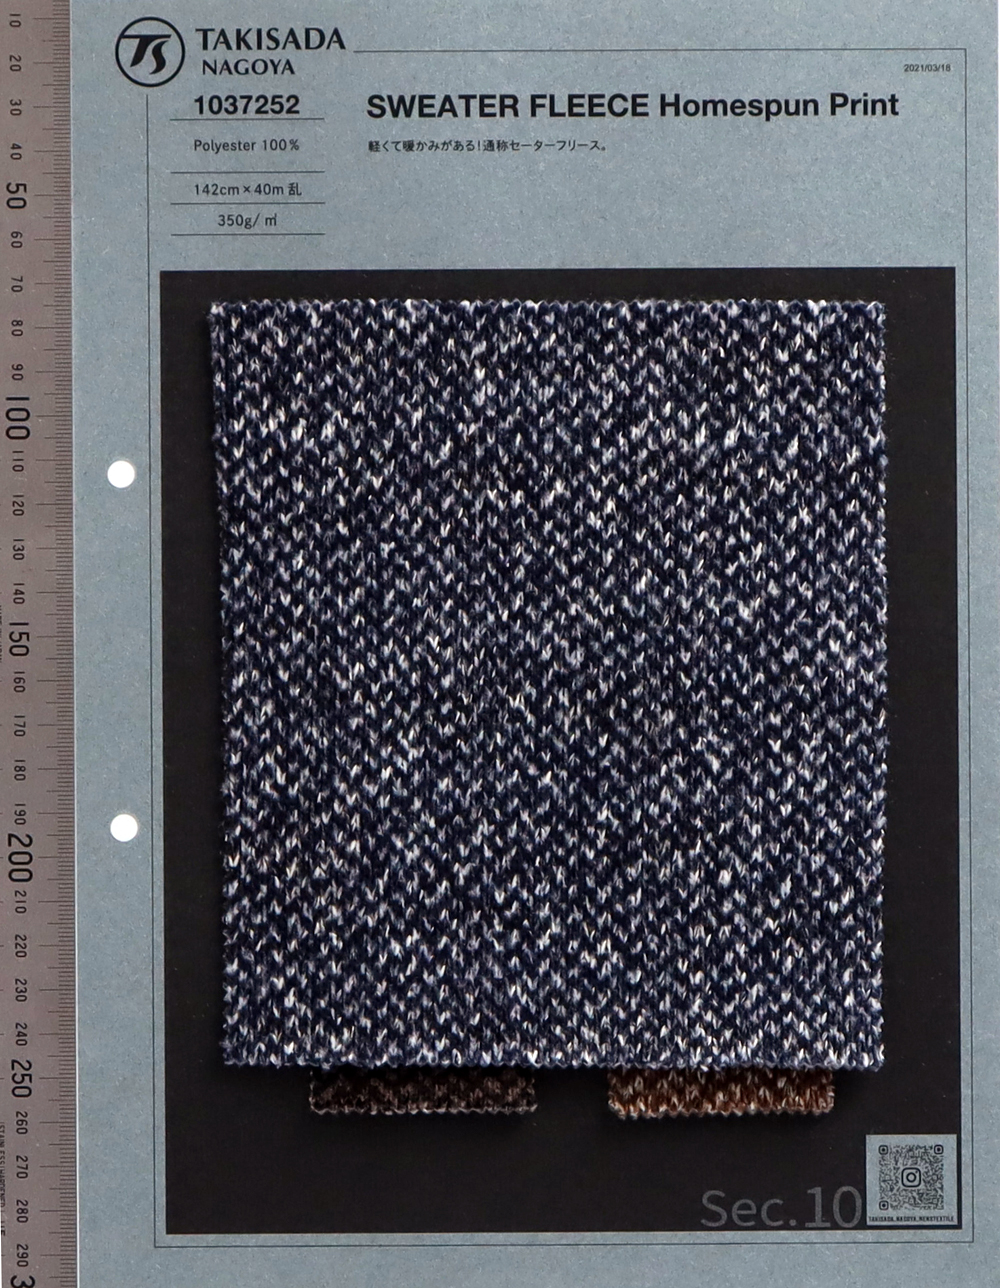 1037252 Jersey Fleece Home Spun Estampado[Fabrica Textil] Takisada Nagoya